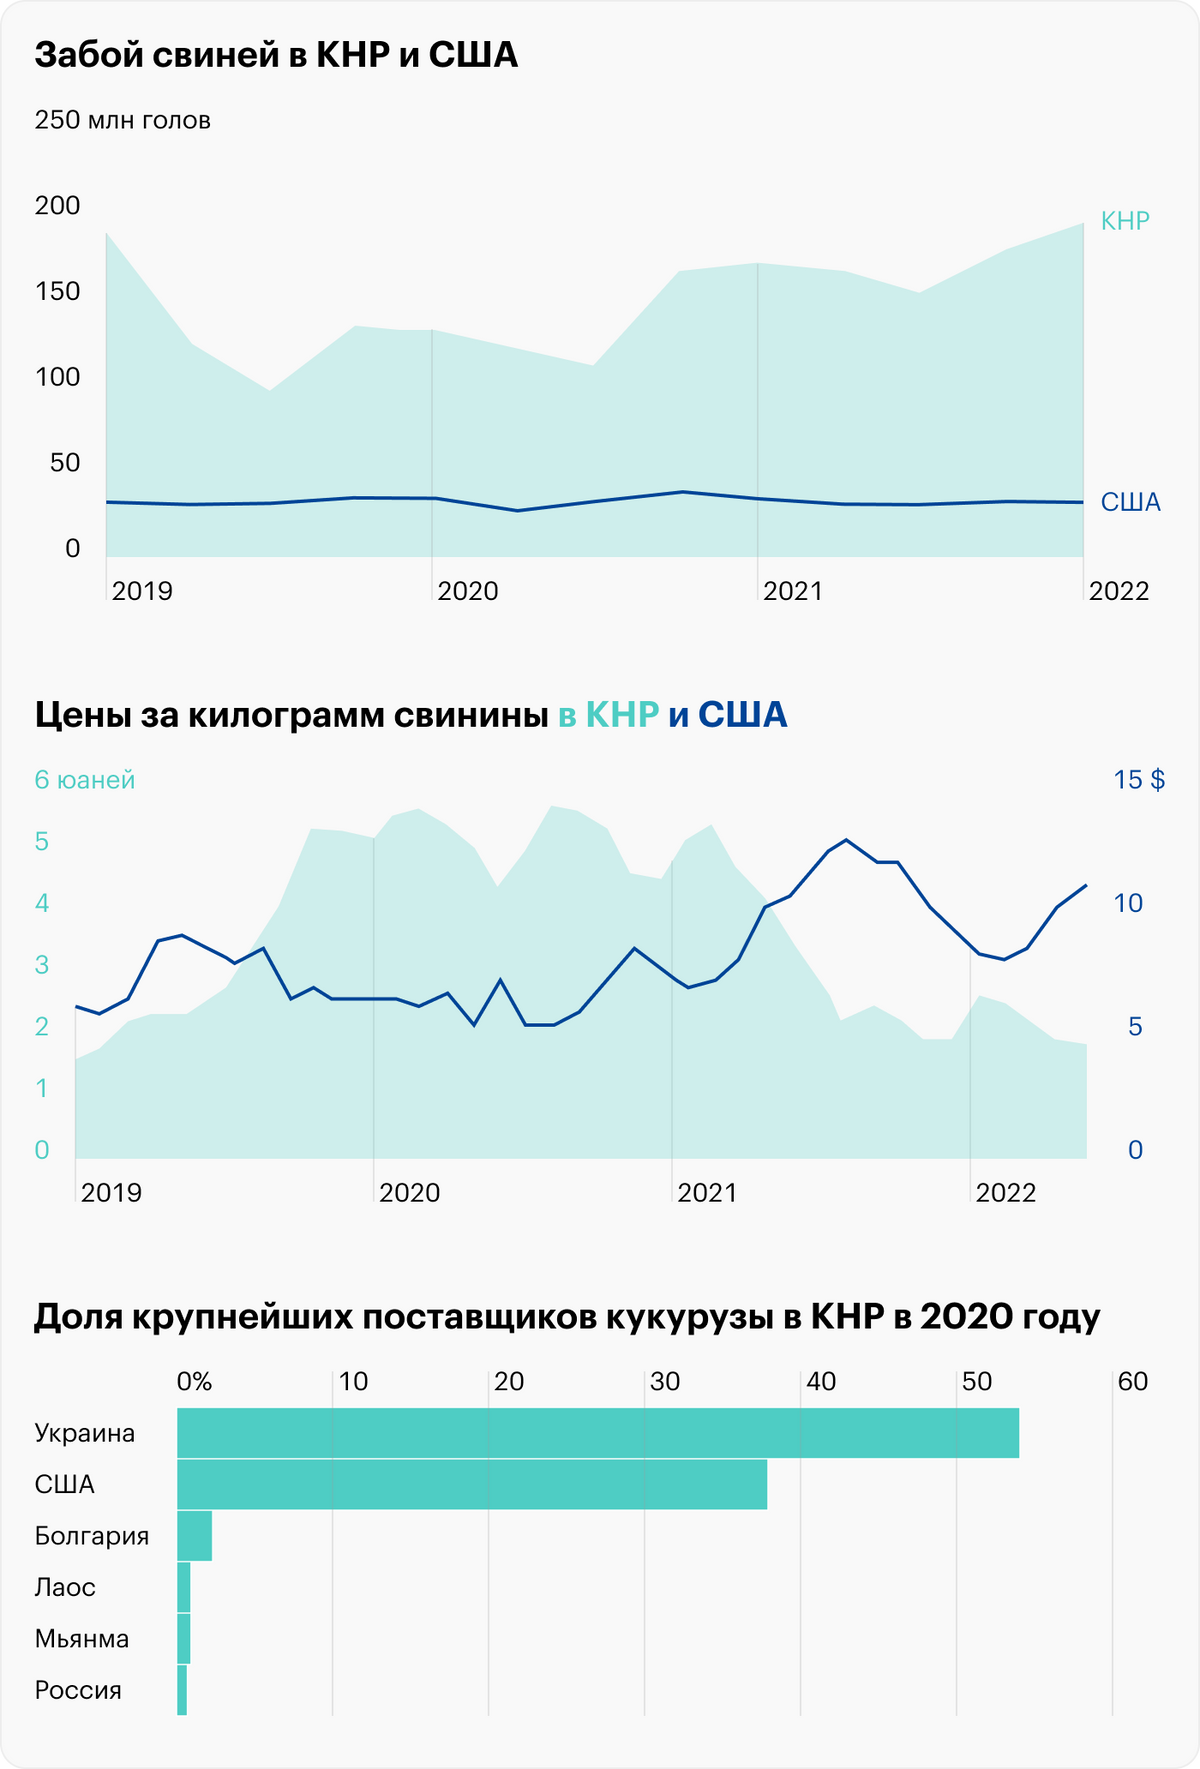 Источник: презентация WH Group, слайд 5 (6), Daily Shot, Ukraine accounts for a large share of corn imports